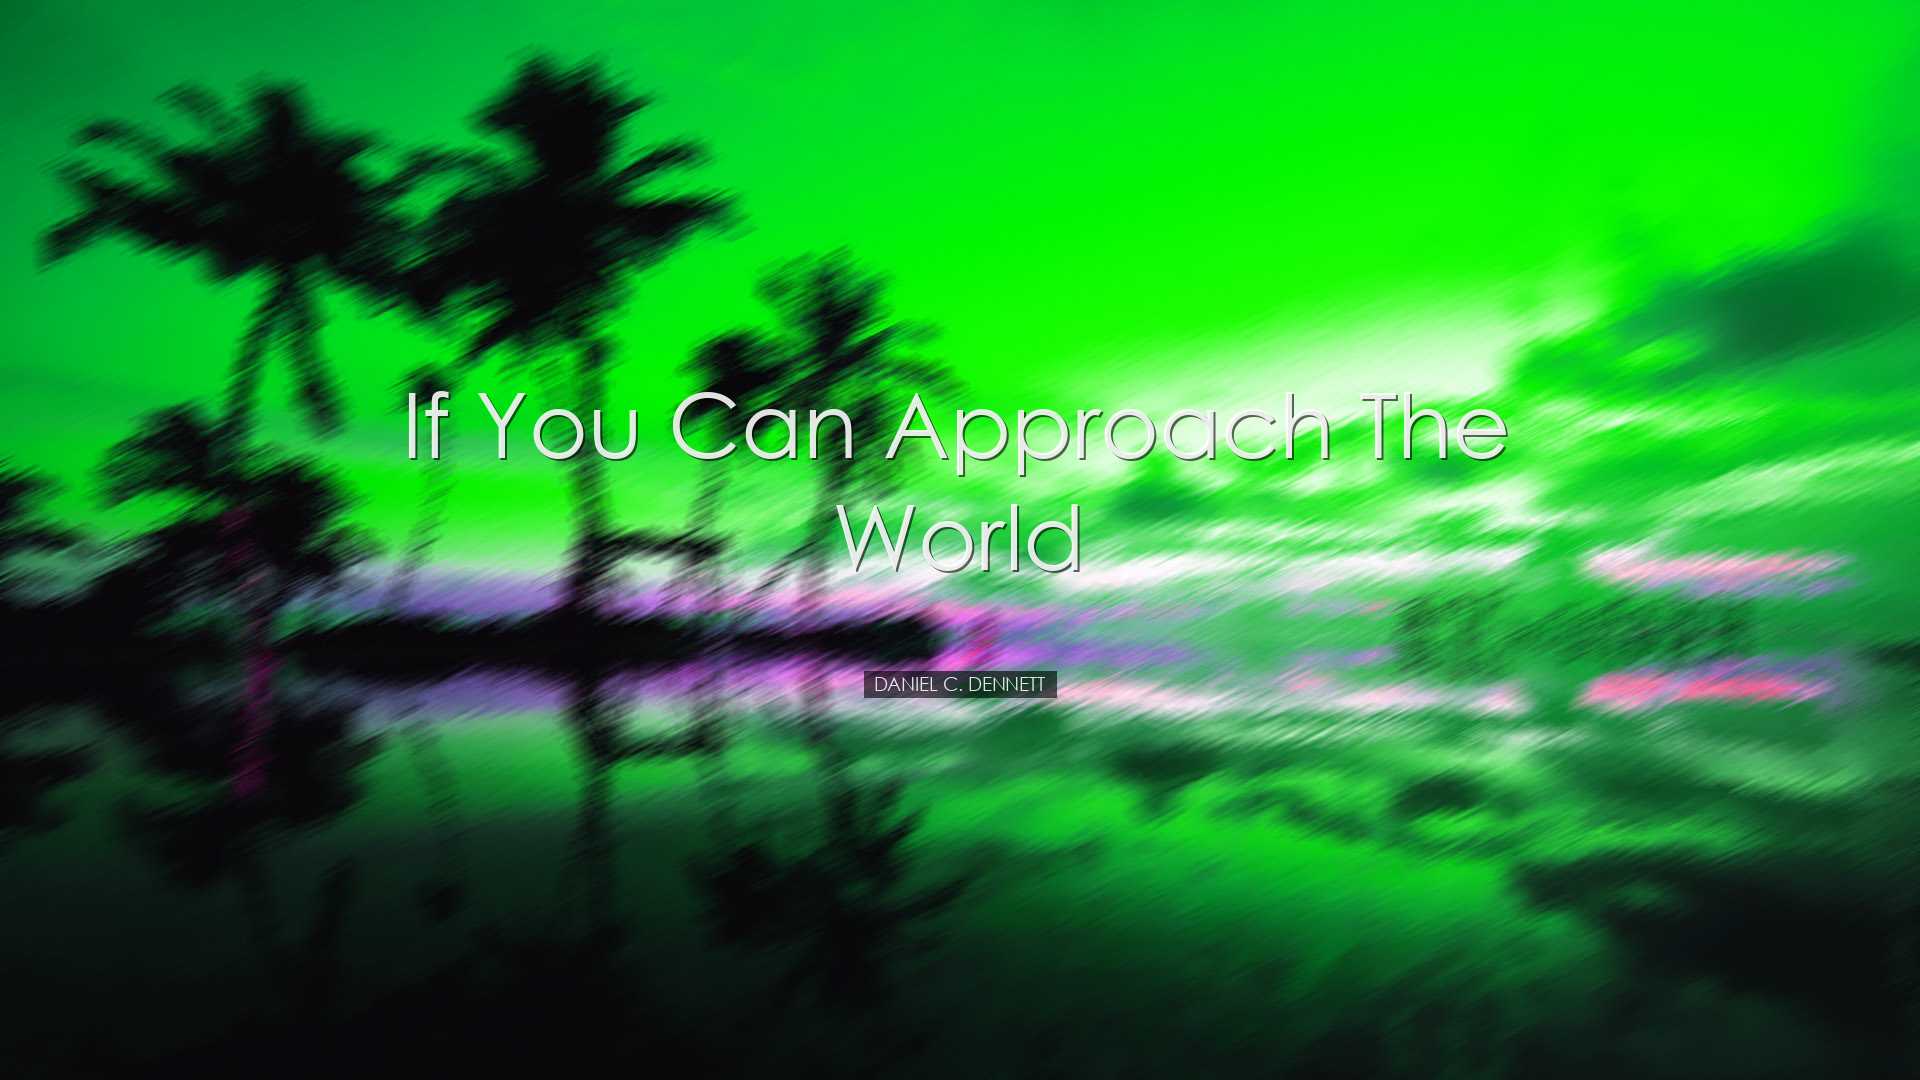 If you can approach the world - Daniel C. Dennett